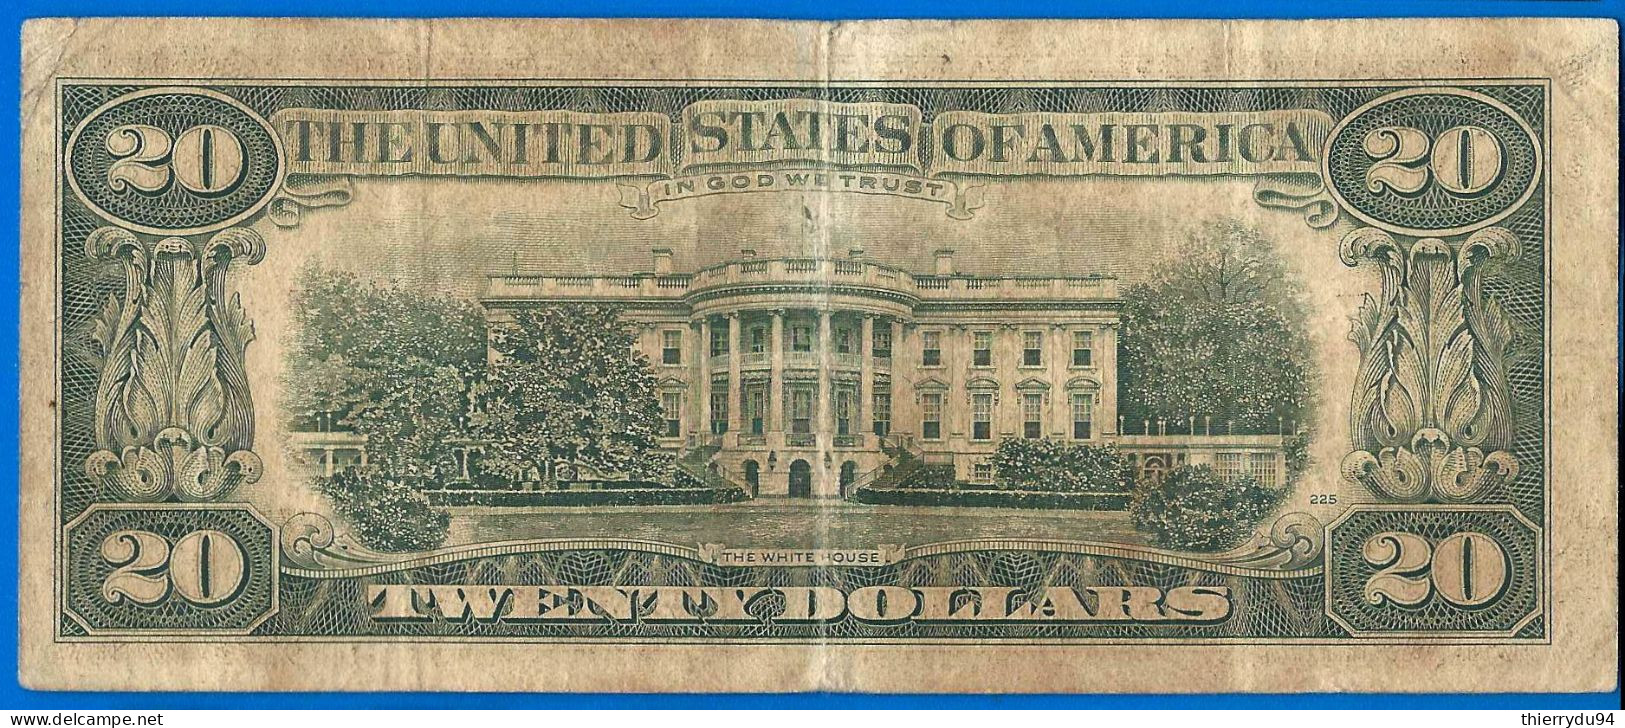 USA 20 Dollars 1981 Mint Chicago G7 Suffixe C Etats Unis United States Dollar US Crypto Bitcoin OK - Biljetten Van De Verenigde Staten (1862-1923)